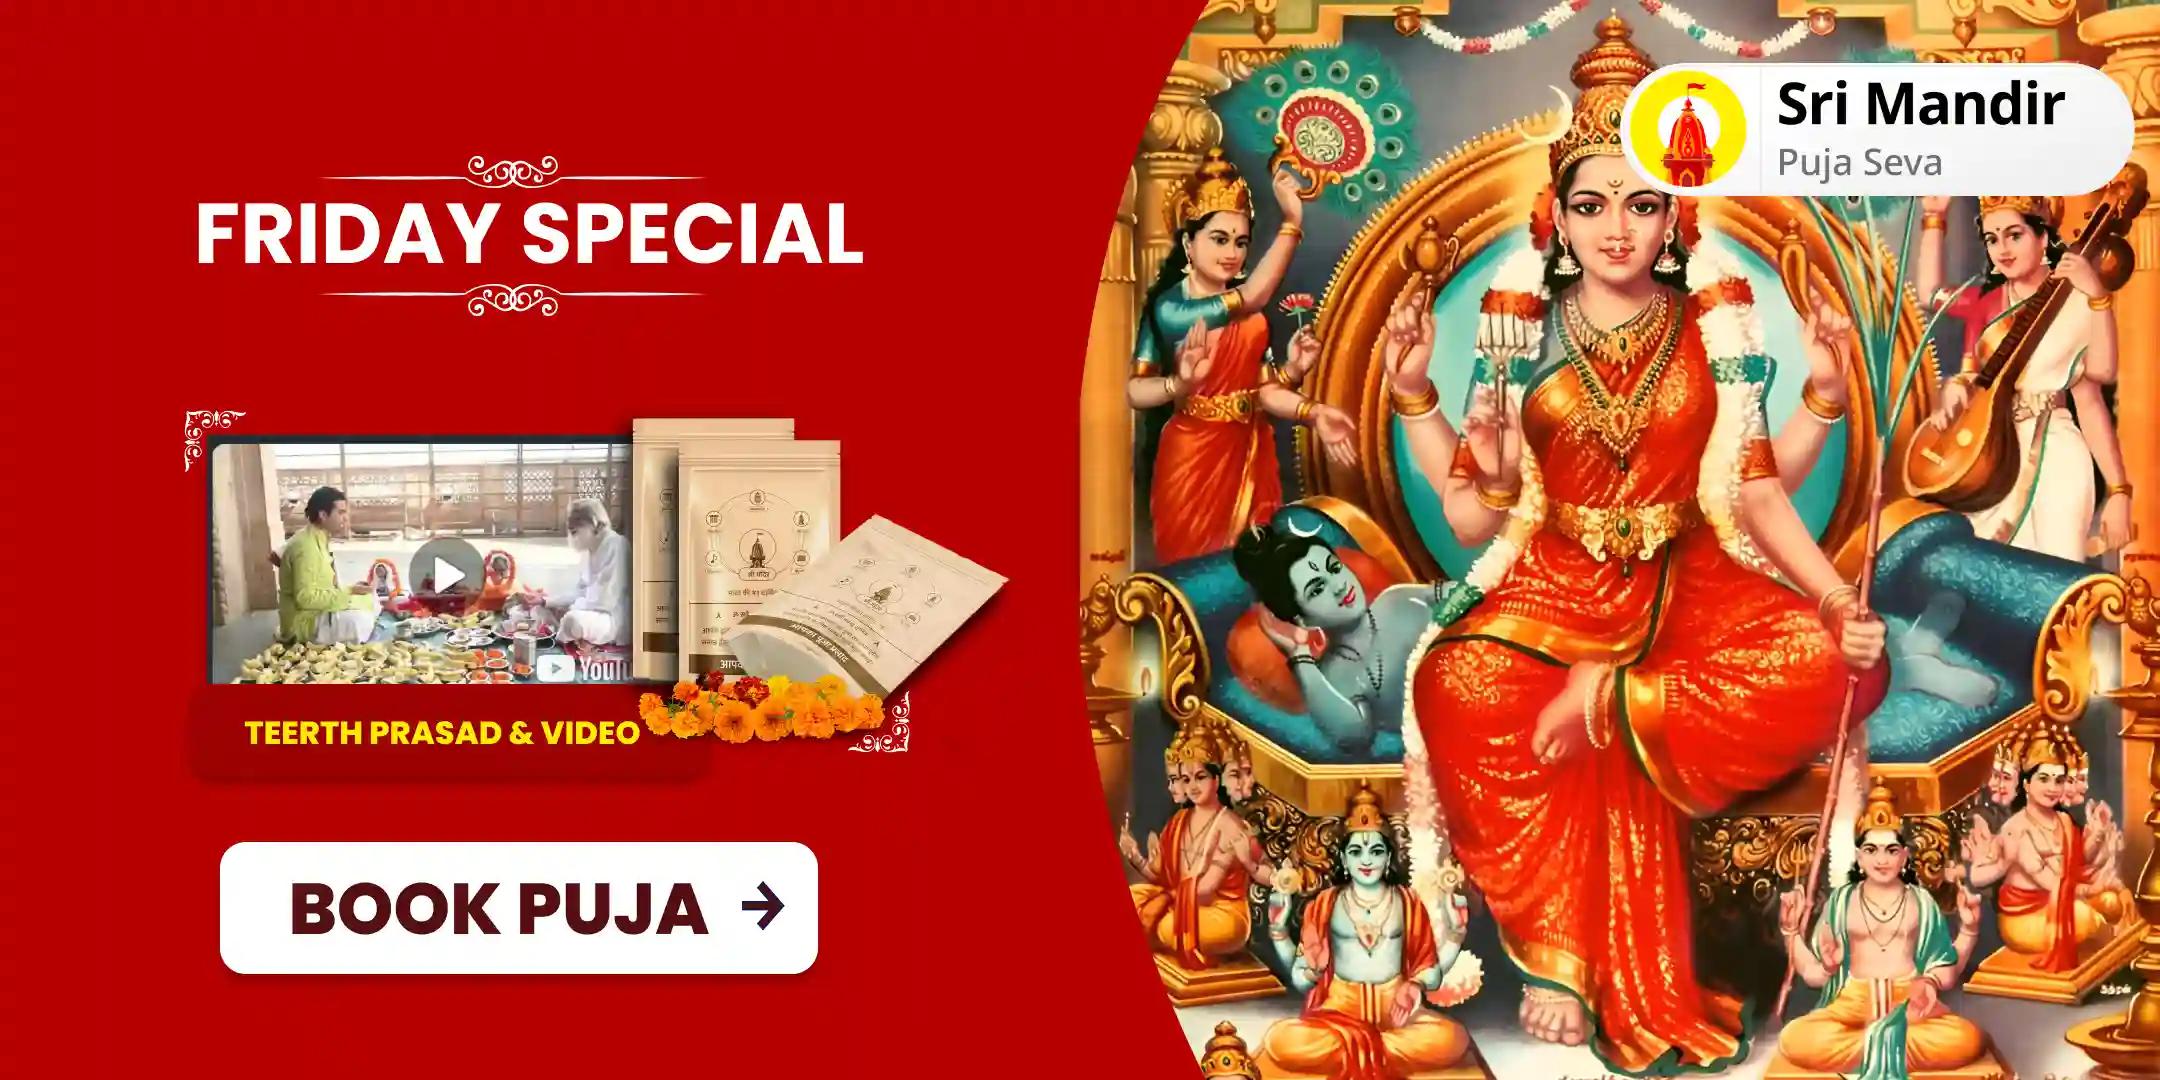 Friday Special Maa Lalita Tripura Sundari Yagya and Shodashi Sahasranama Path for Fulfilment of All Wishes